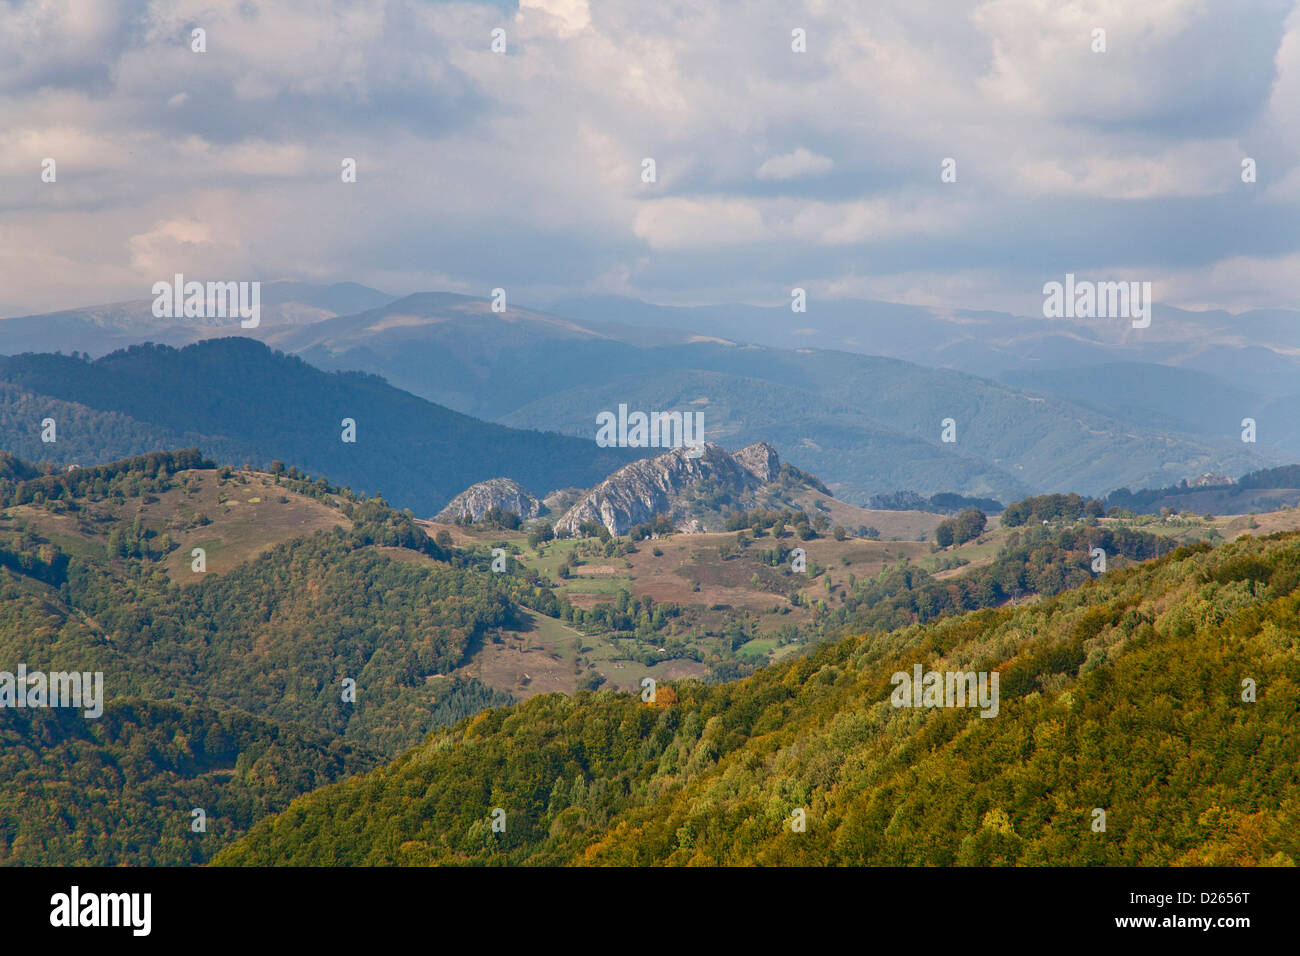 The Carpathian Mountains, Cerna valley near Baile Herculane. Europe, Eastern Europe, Romania, September Stock Photo